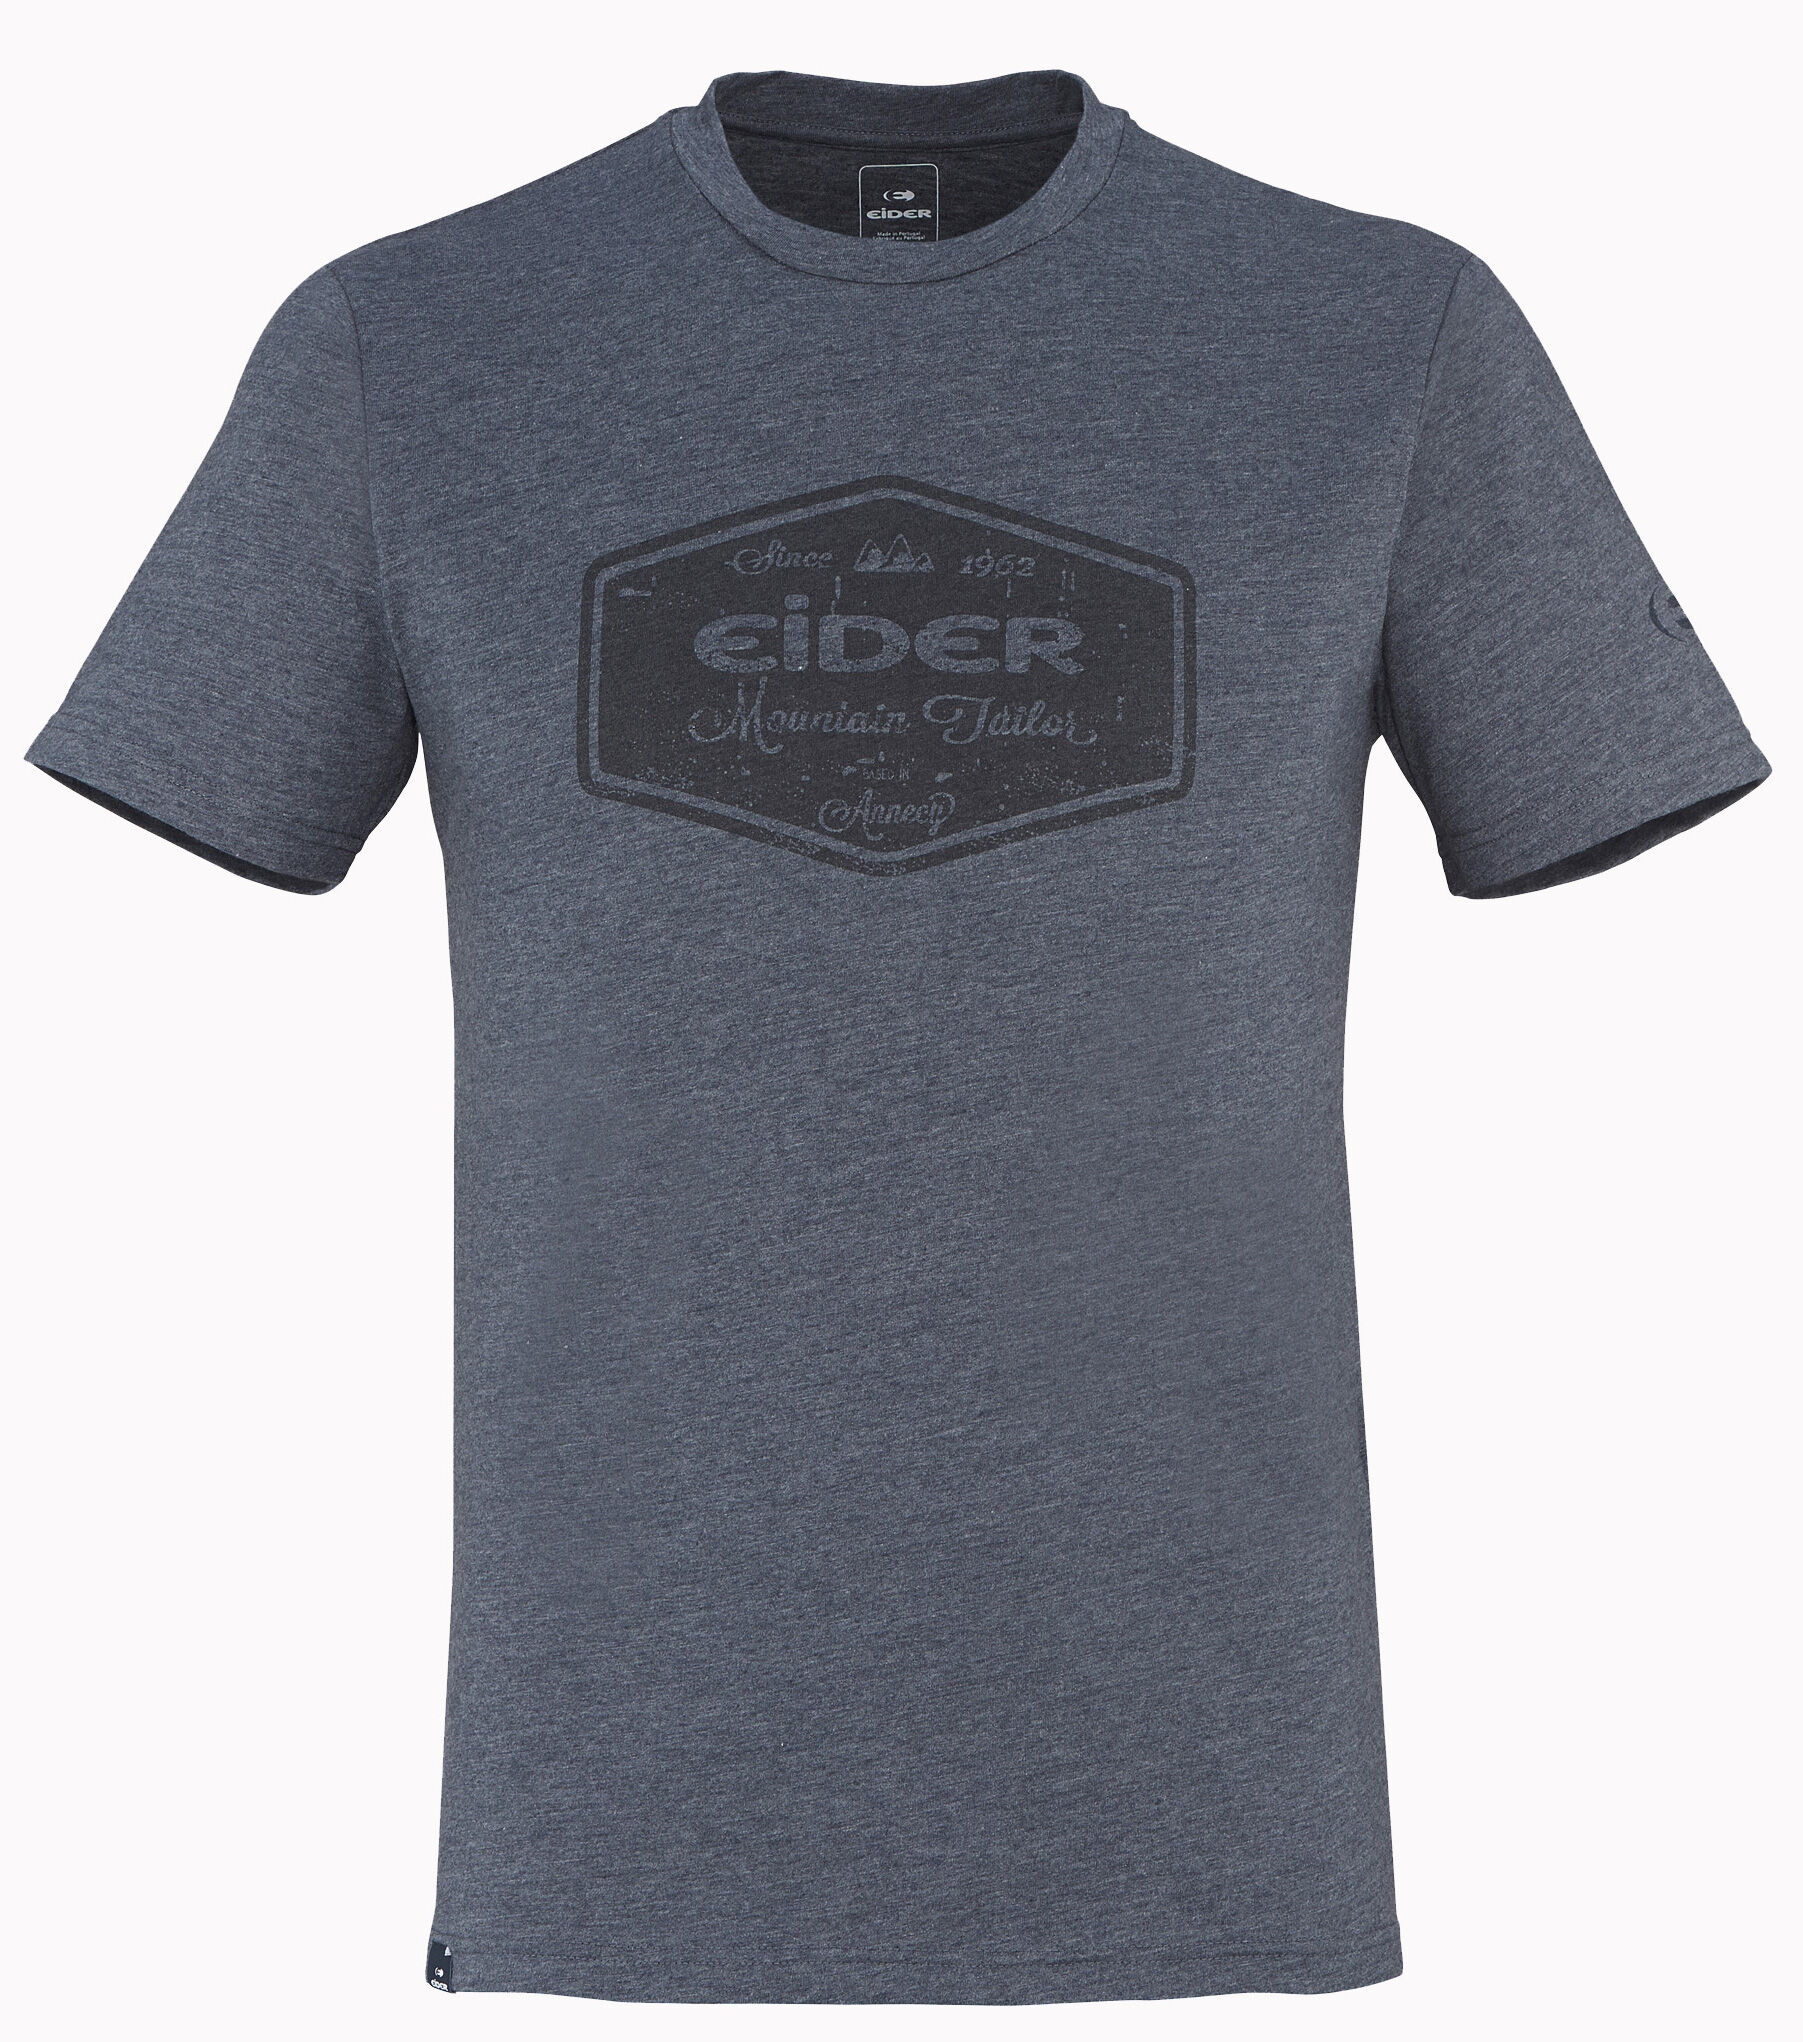 Eider - Yulton Tee M - T-shirt - Men's